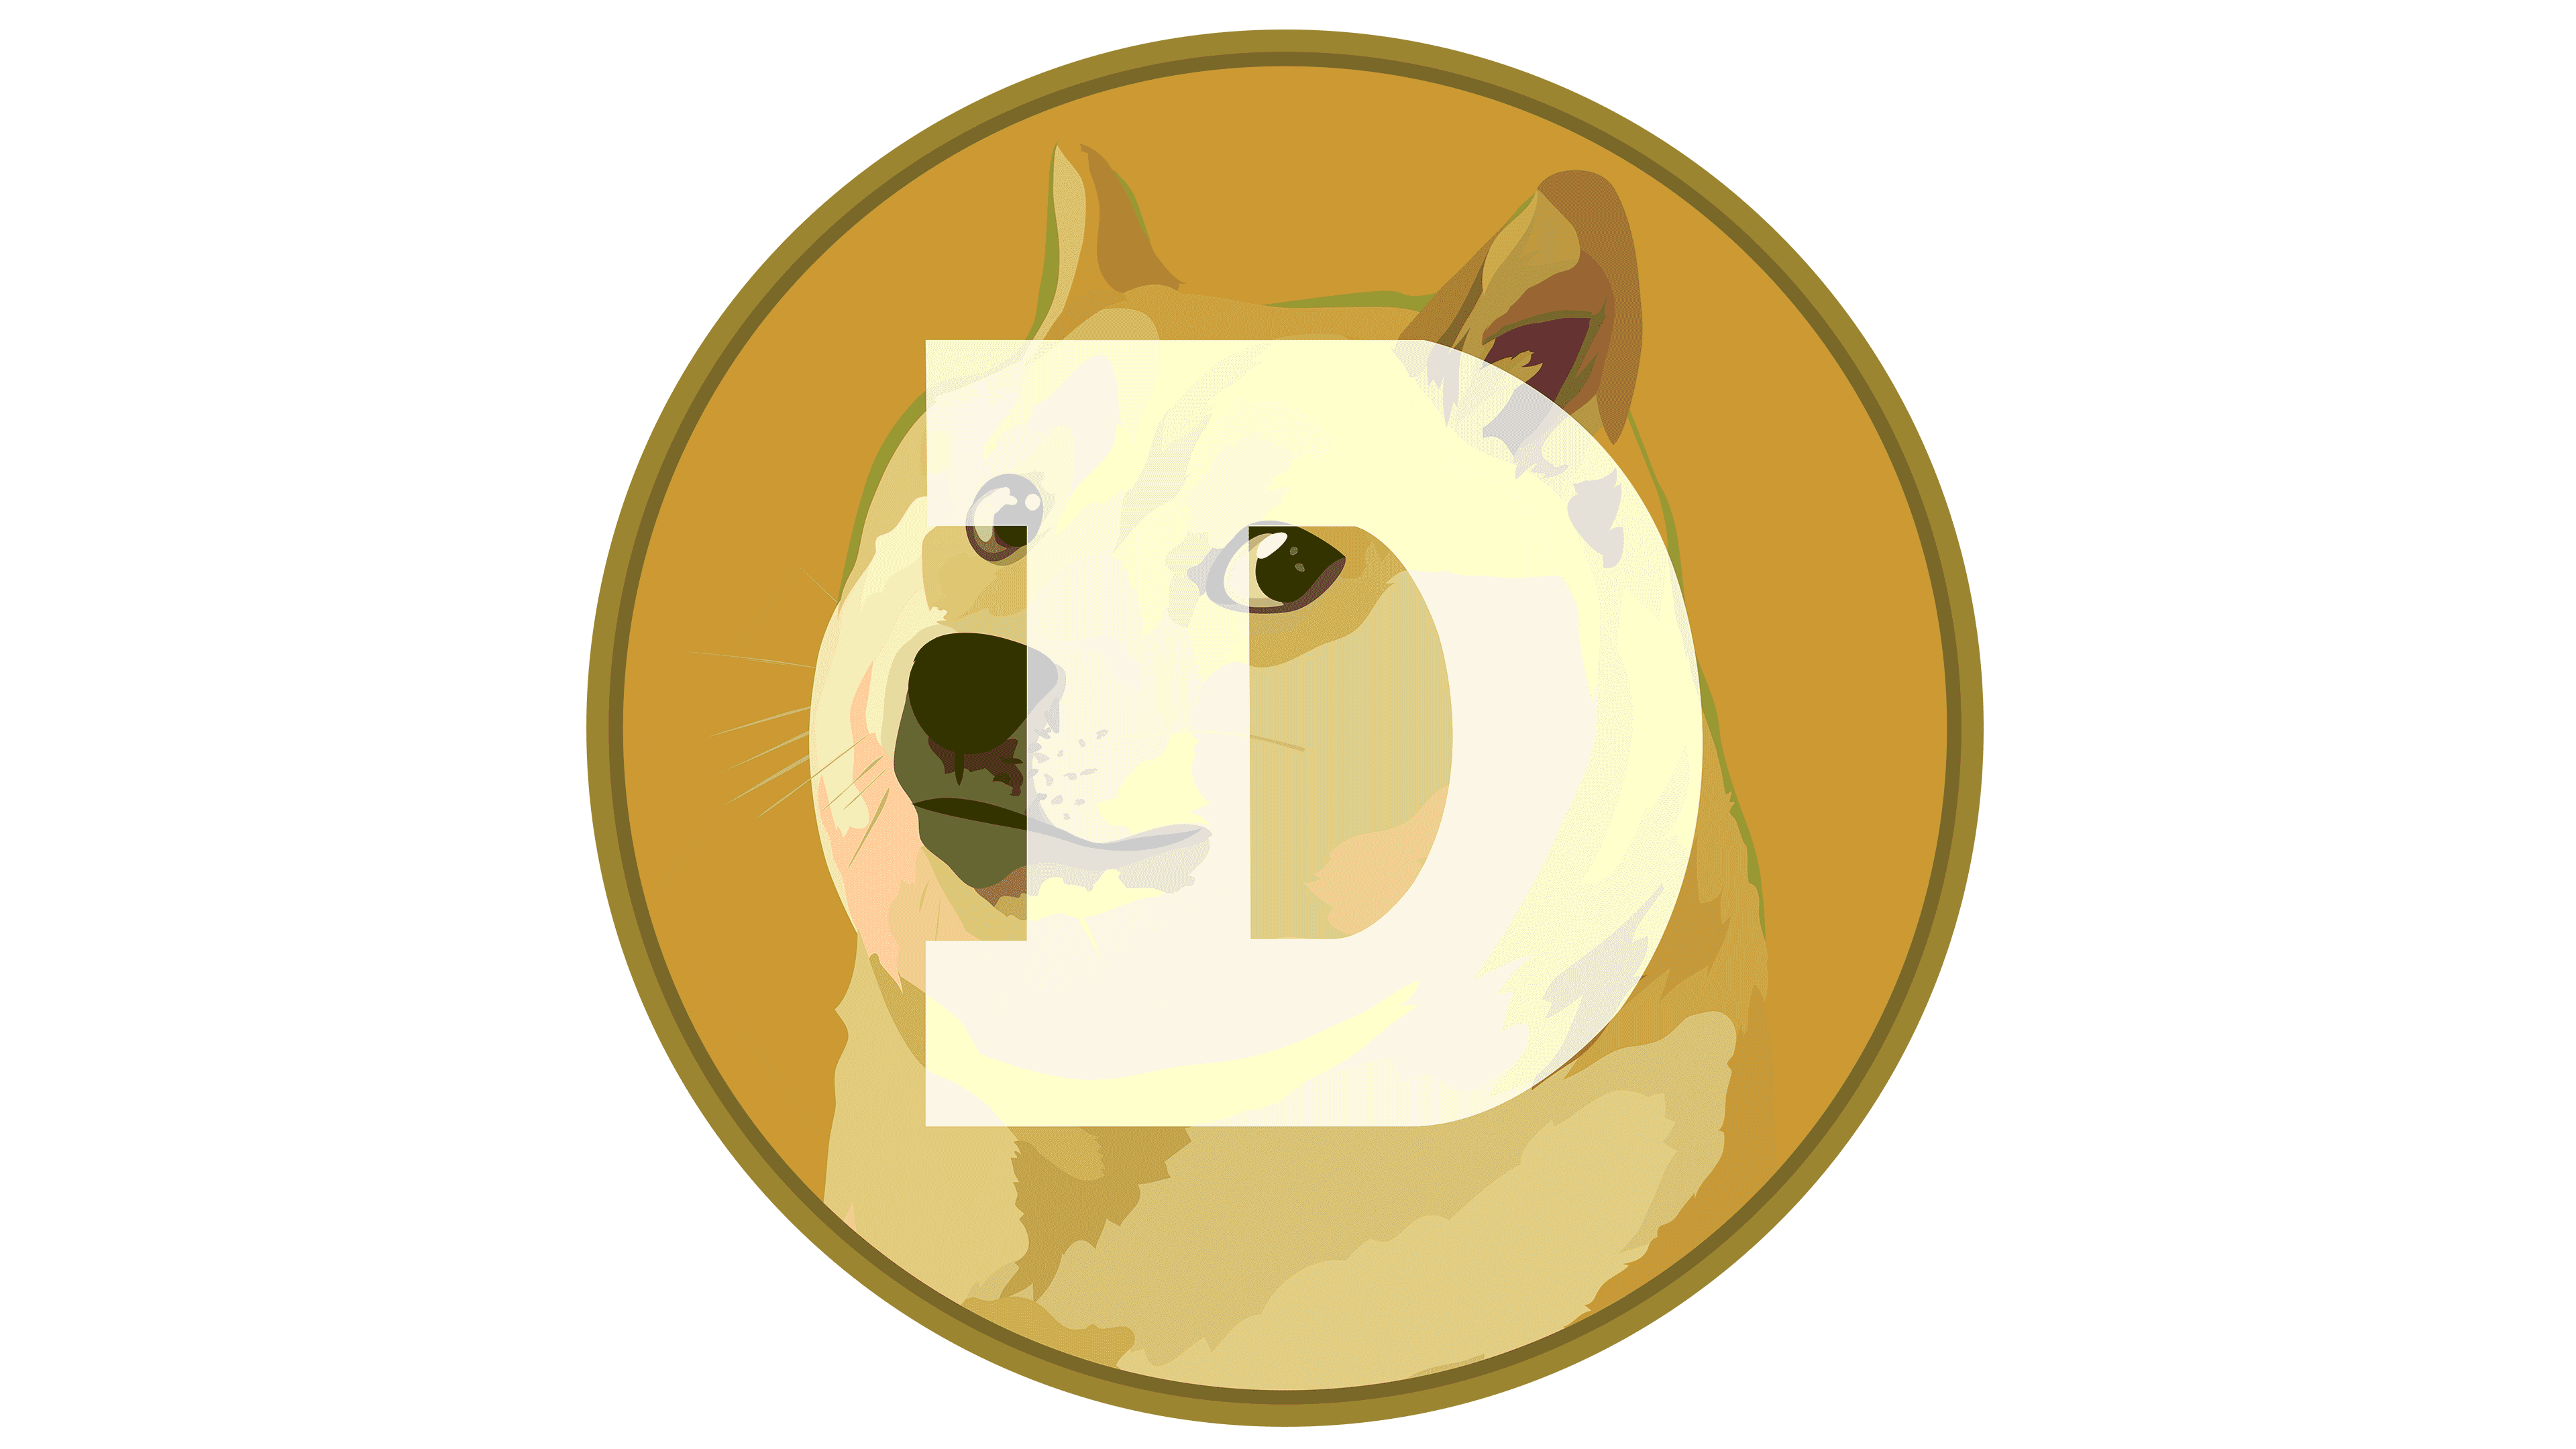 Dogecoin Icons & Symbols